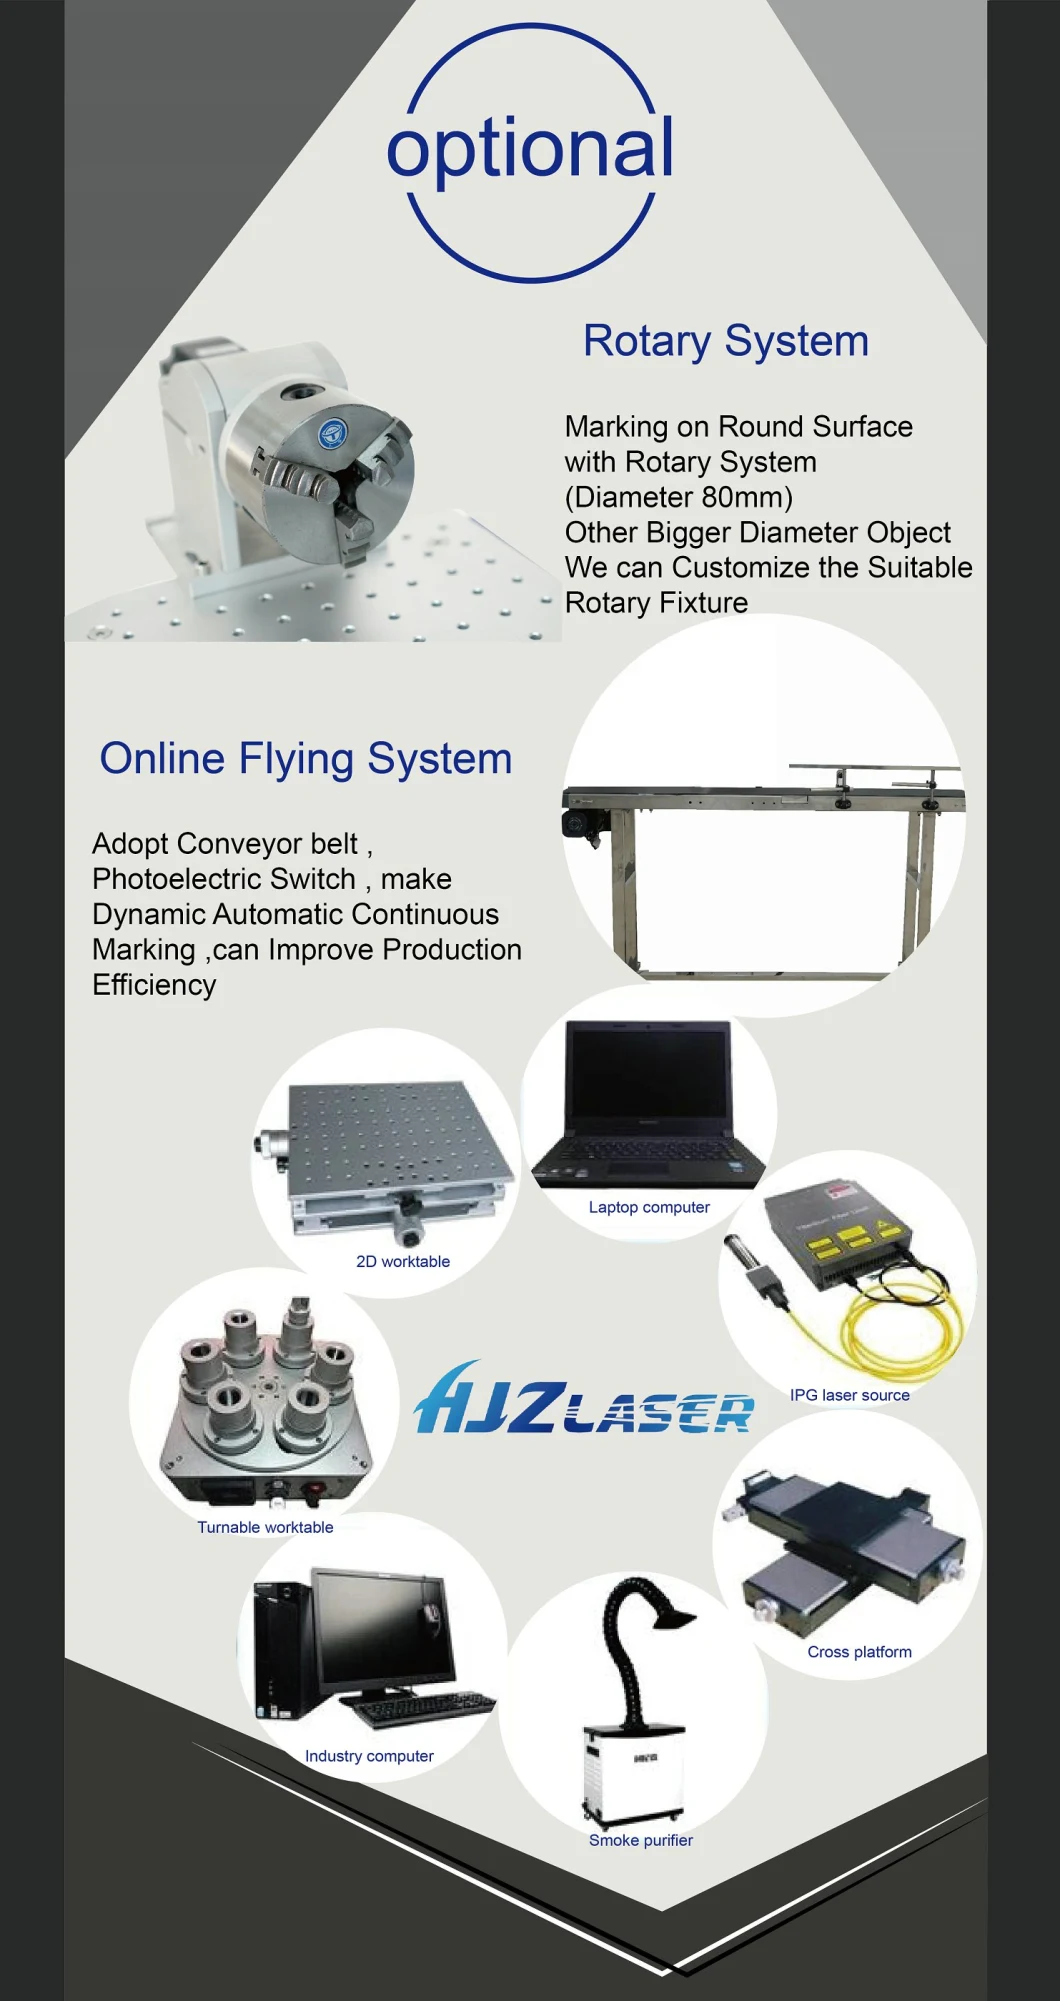 Hjz Laser Small Mini Laser Marking Machine& Fiber Laser Engraving Machine